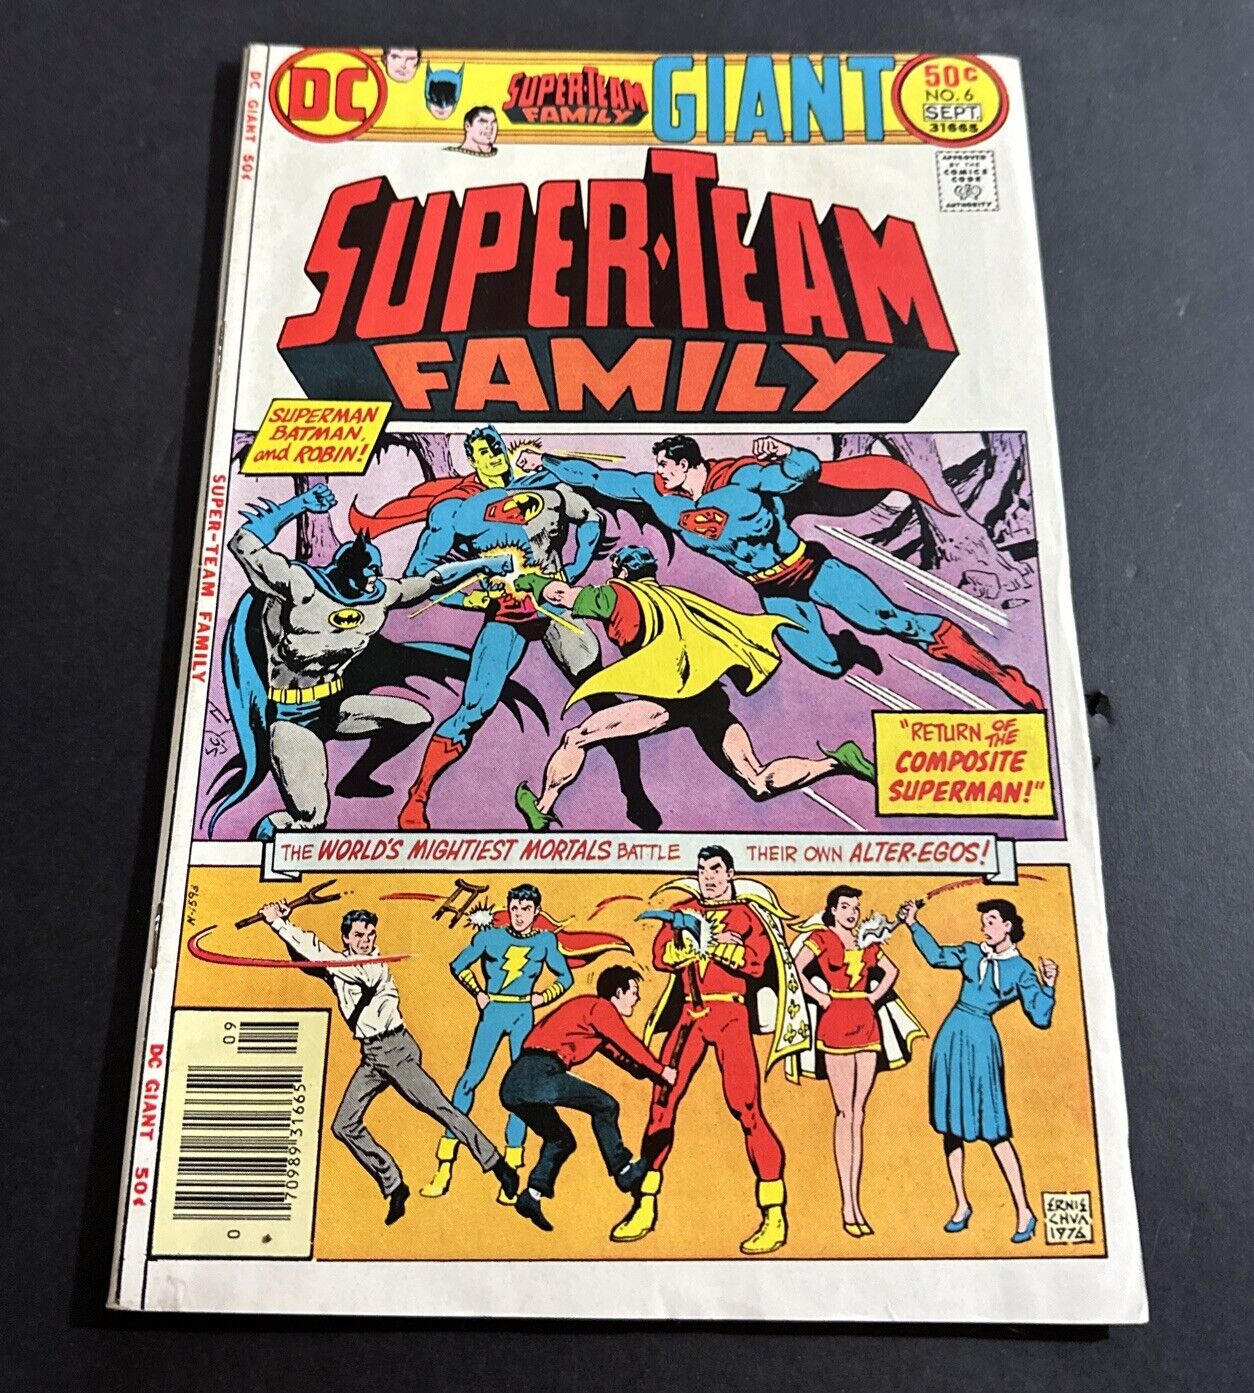 Super-Team Family - Issue #6 (Aug-Sept 1976, DC Comics), 4.0-5:0